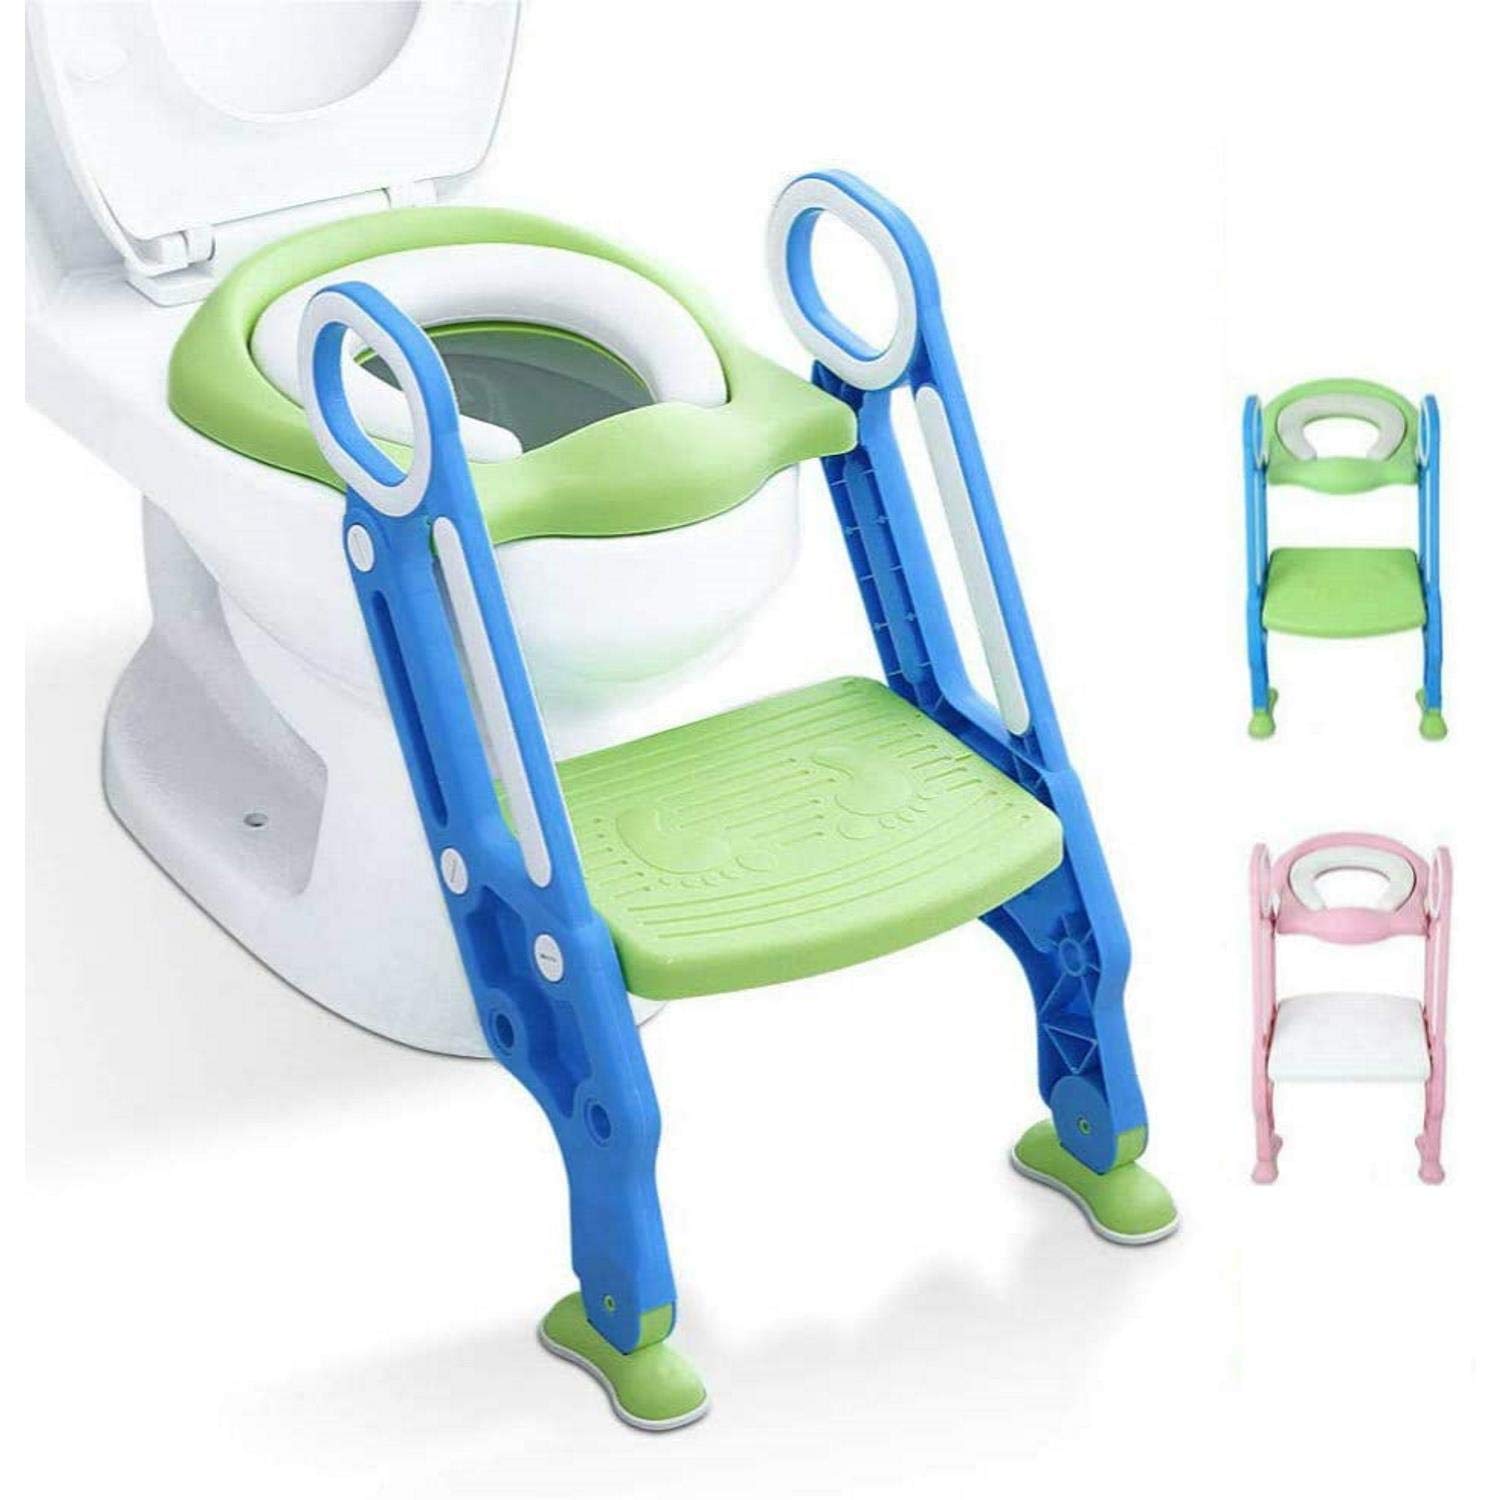 ALBERT AUSTIN Toilet Training Seats, Toilet Steps for Toddlers, Potty Training Seats, Toilet Ladder Seat for Toddlers, Child - Anti Slip, Soft Cushion, Toilet 38-42cm, 1-7 Years Old Kids (Green/Blue)